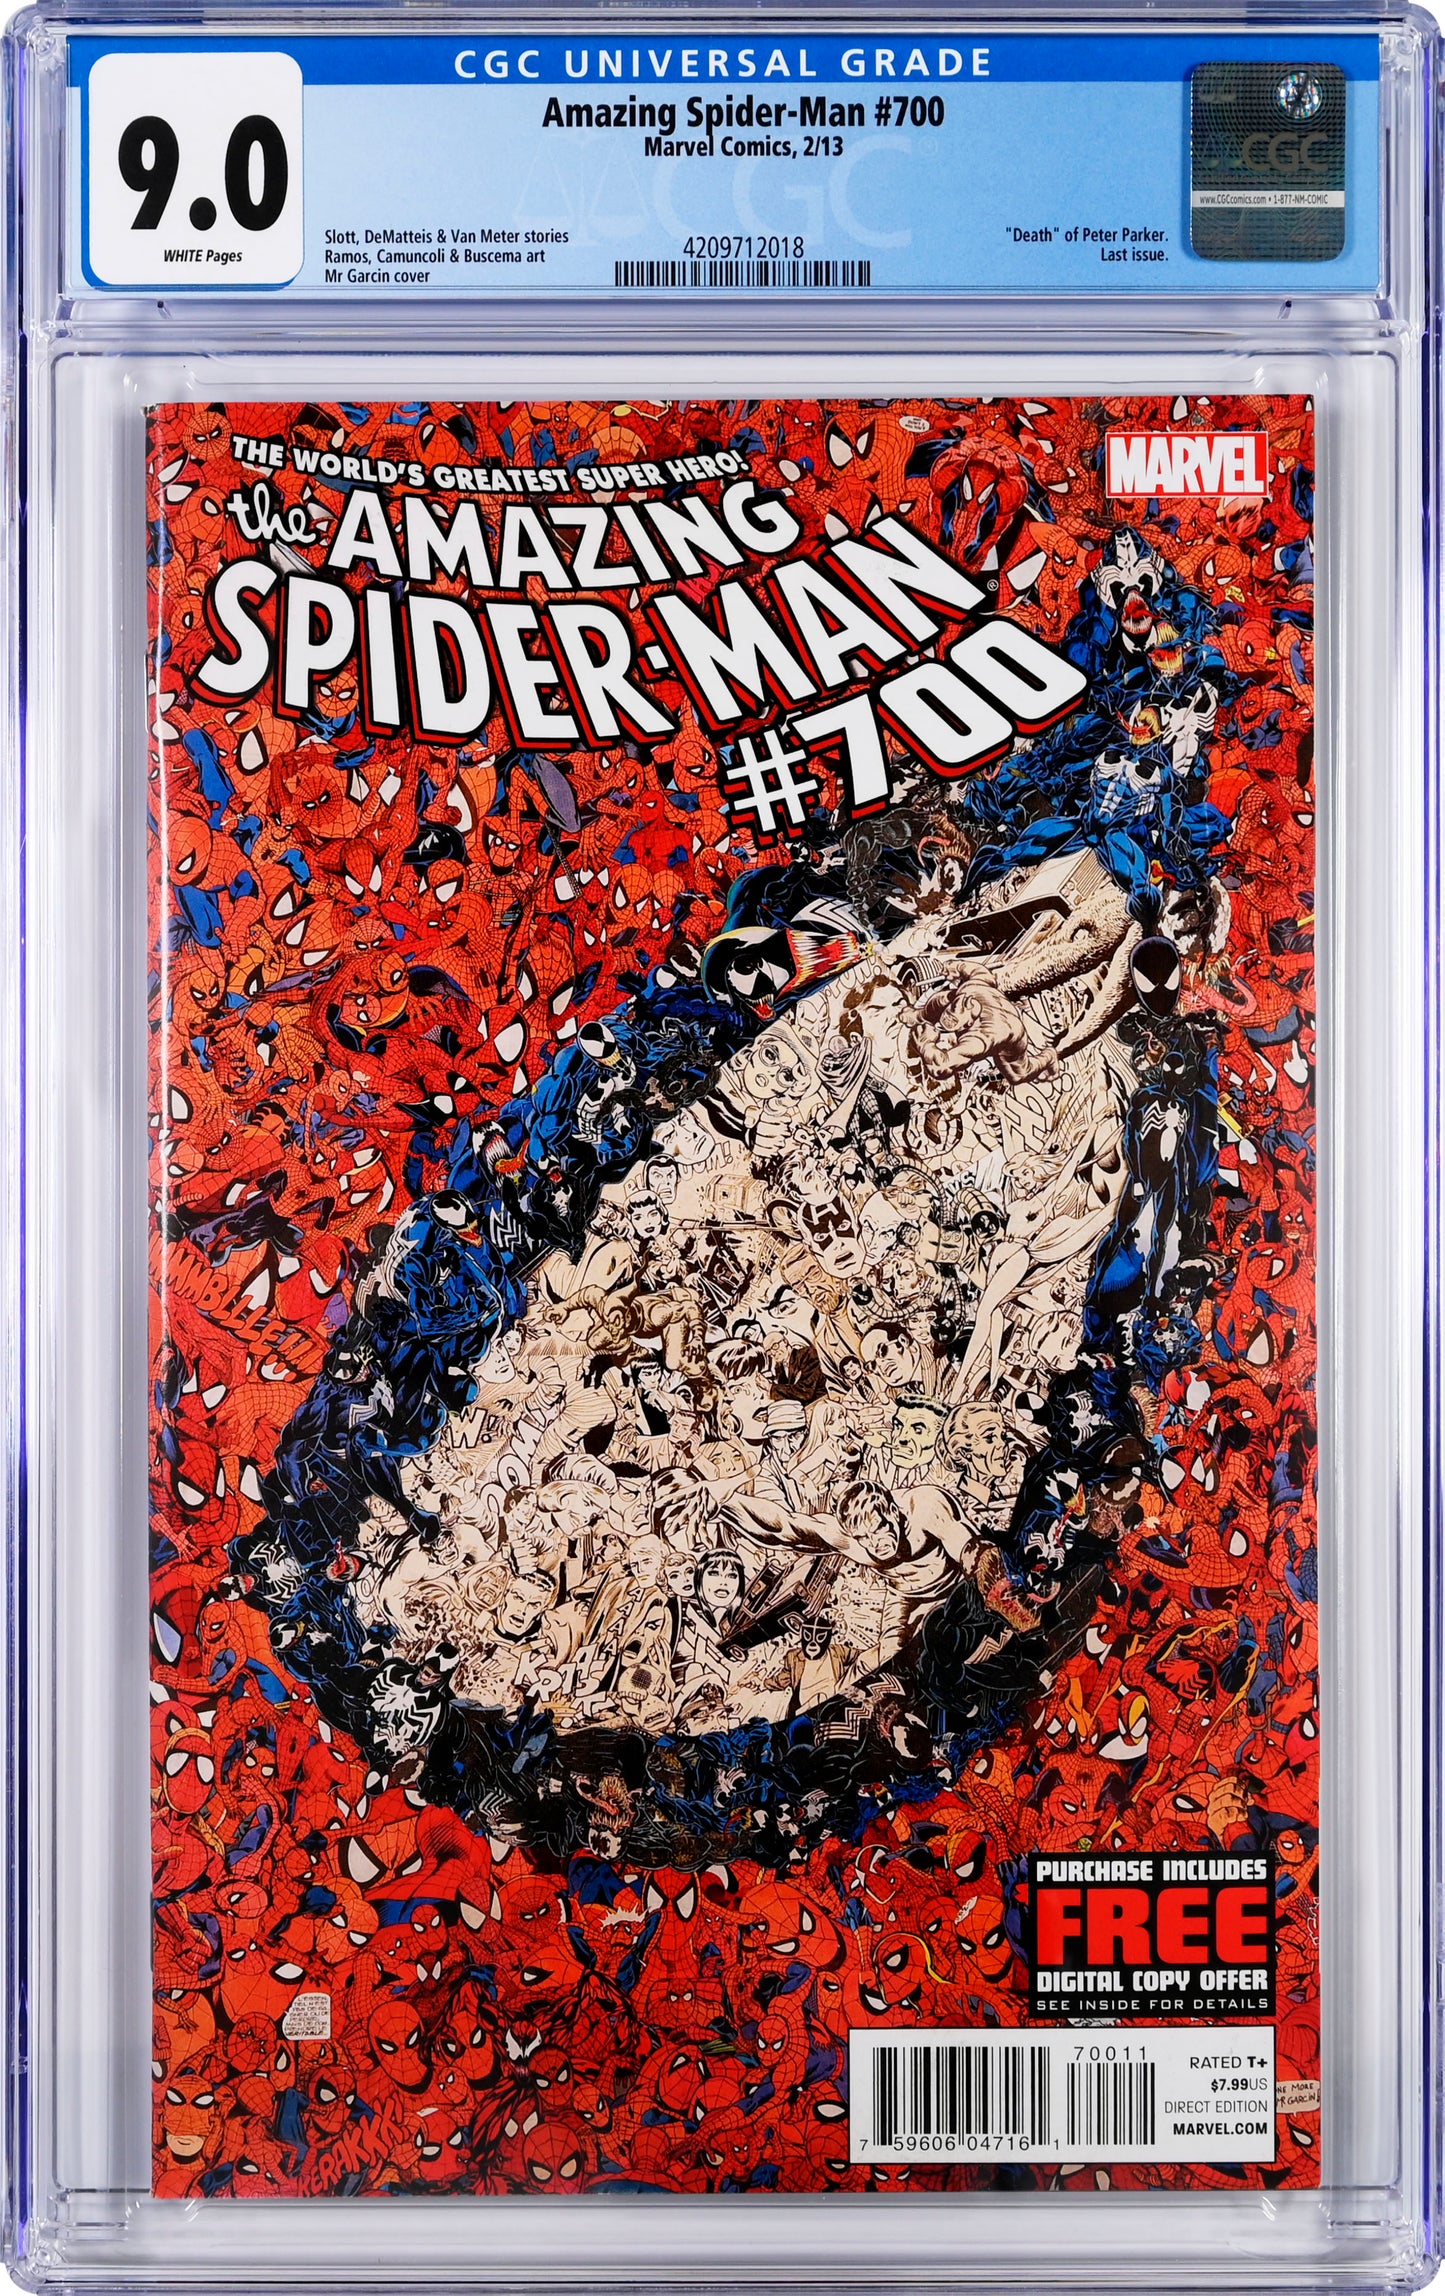 The Amazing Spider-Man #700 - CGC Graded 9.0